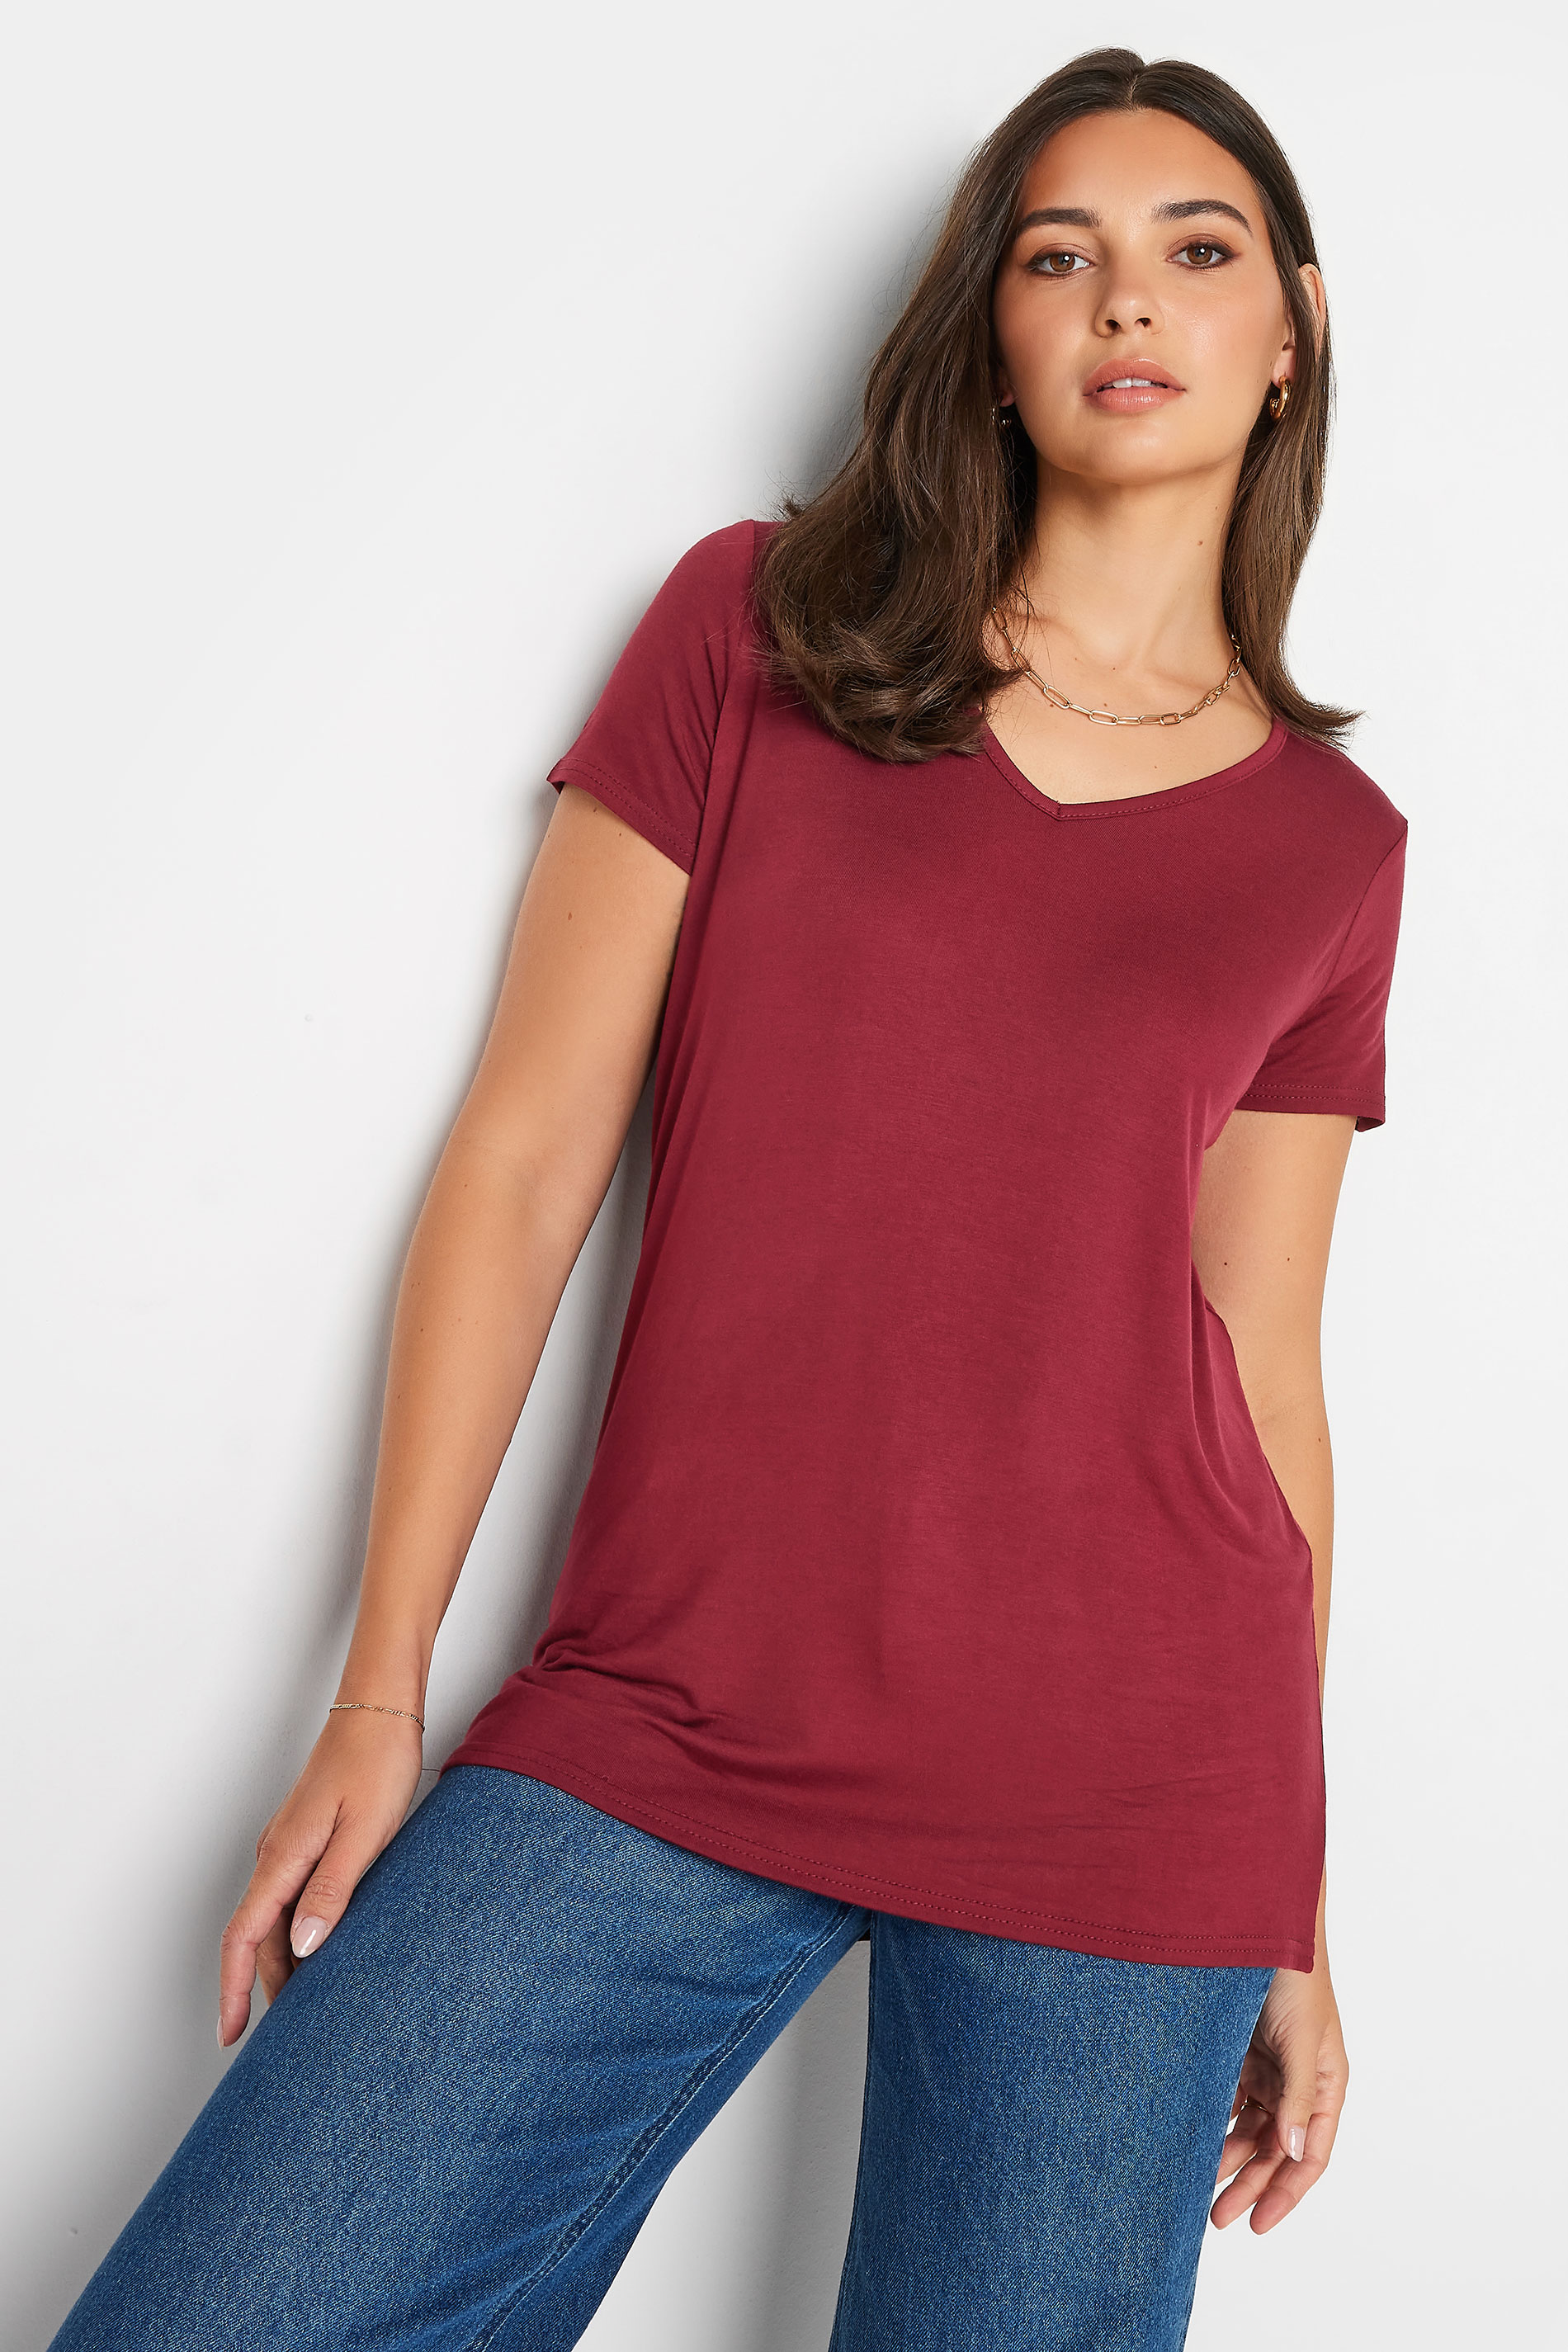 LTS Tall Women's Berry Red V-Neck T-Shirt | Long Tall Sally 1